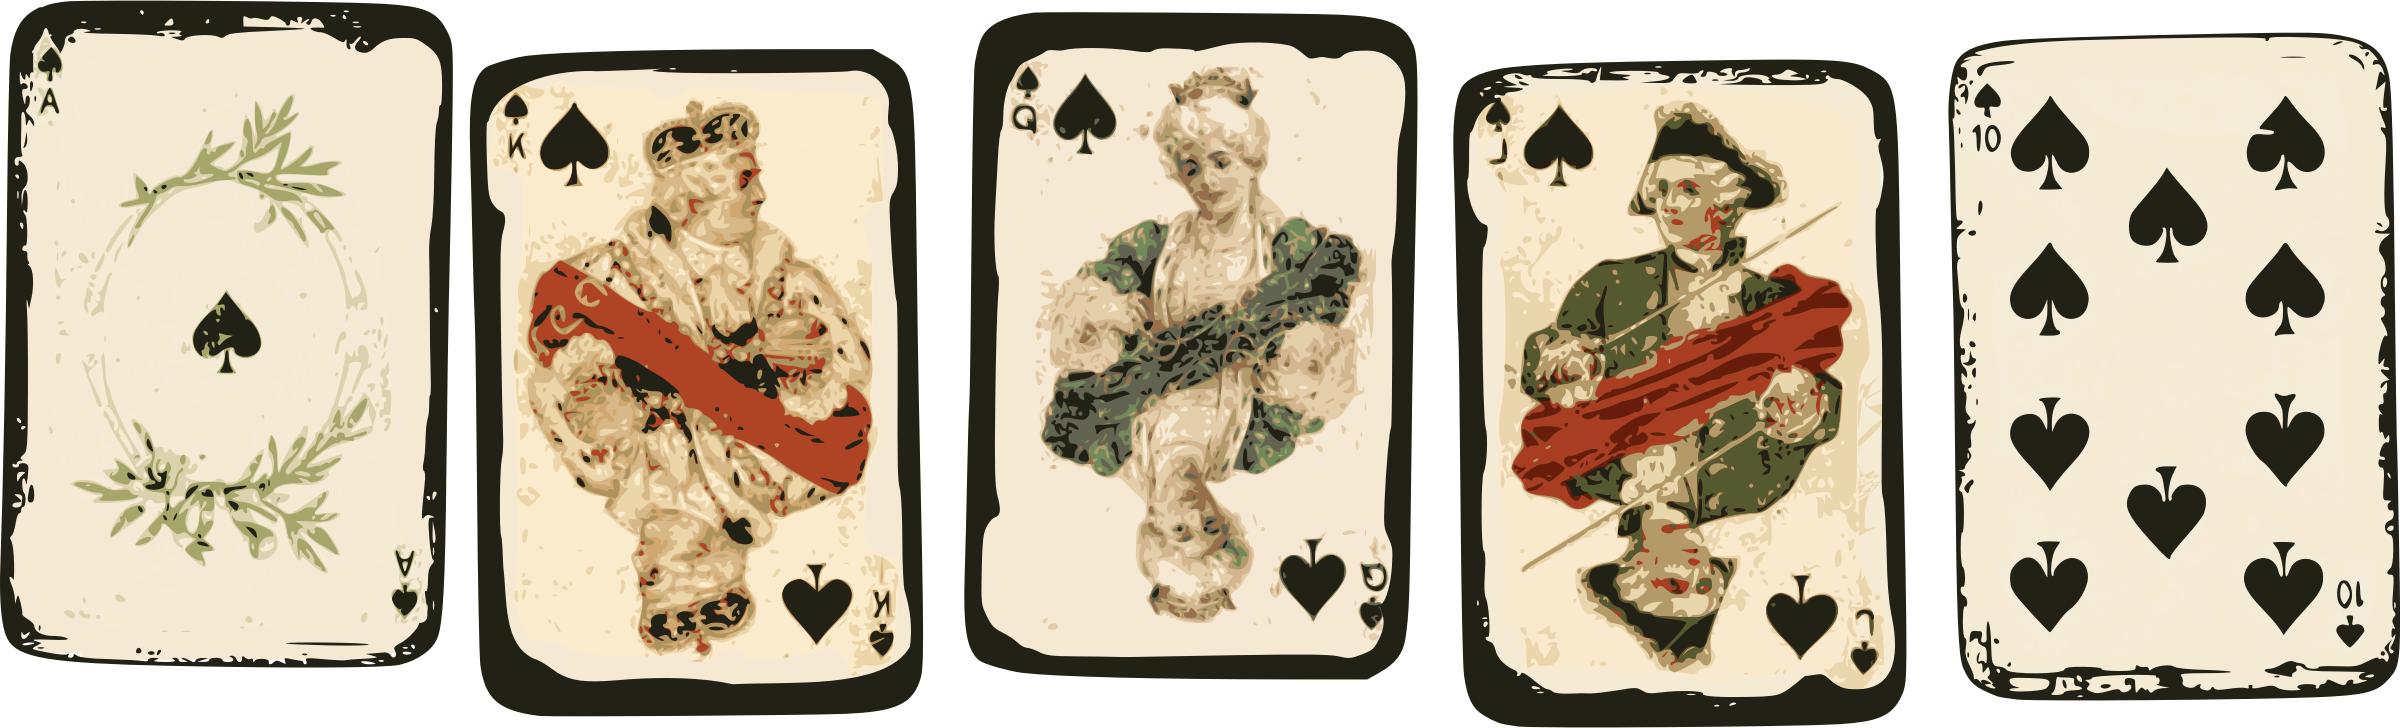 Royal Flush - Poker Cards PNG icons